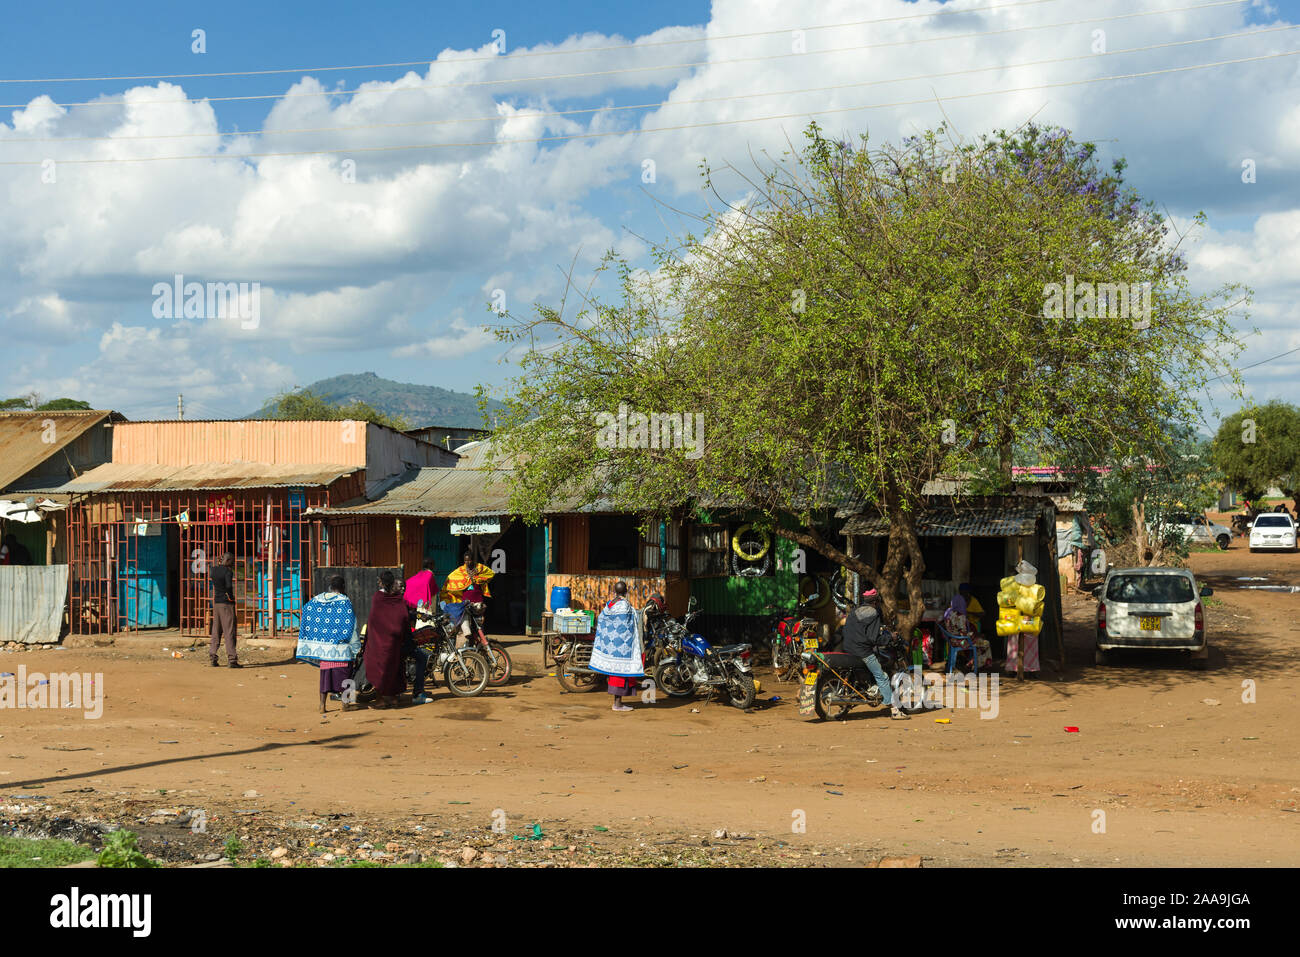 L'extérieur de petits magasins avec les habitants à l'extérieur dans une petite ville dans le comté de Kajiado, Kenya, Afrique de l'Est Banque D'Images